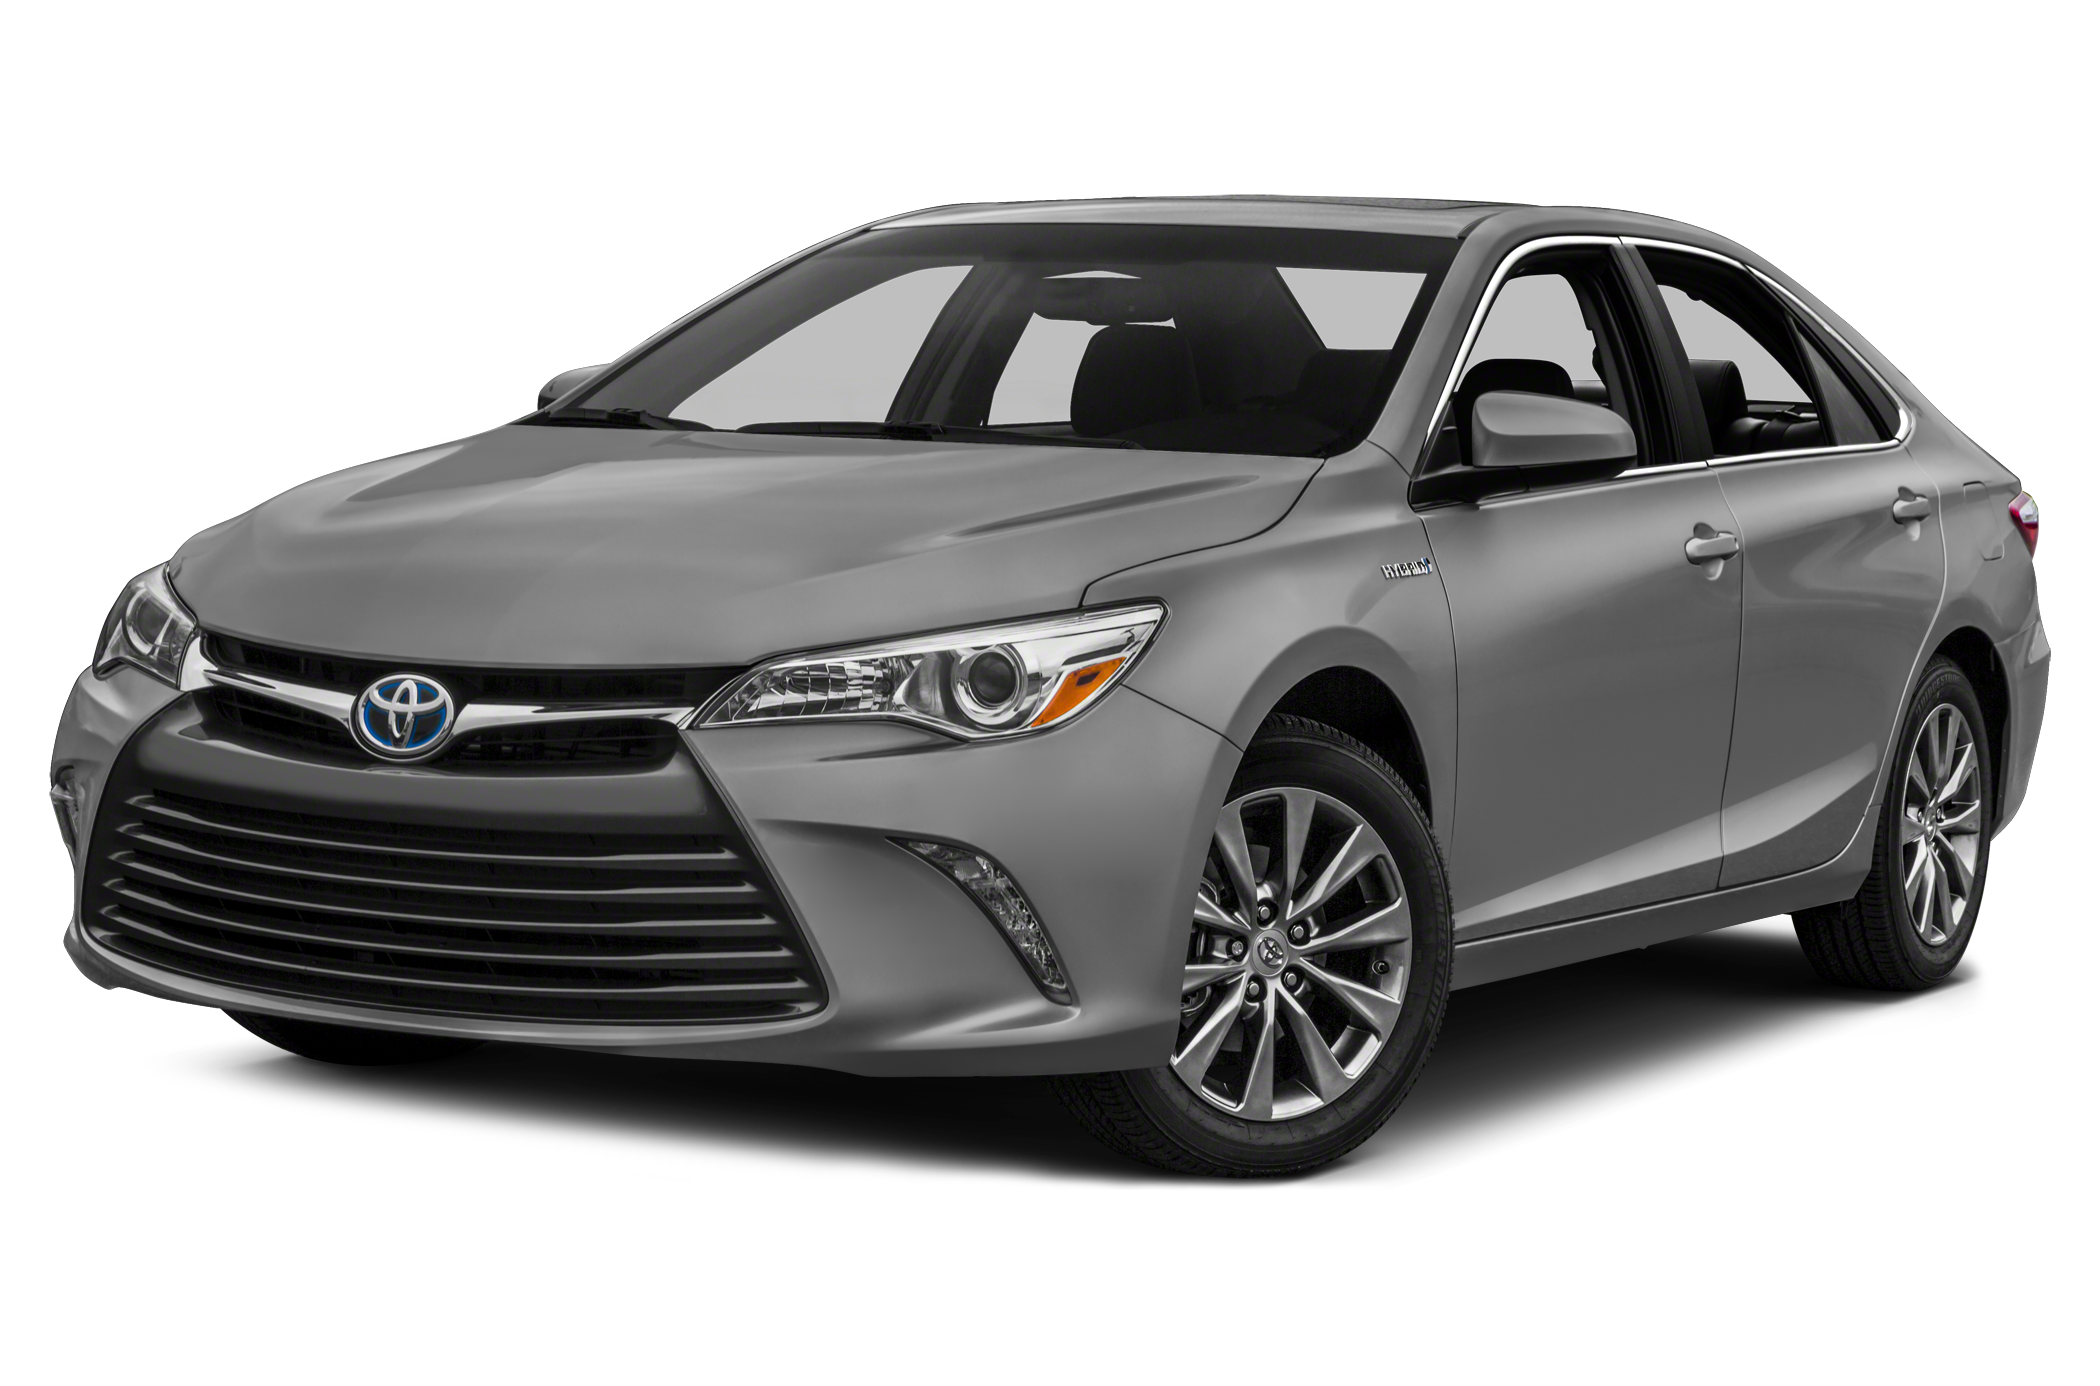 2016 Toyota Camry Hybrid View Specs, Prices & Photos WHEELS.ca